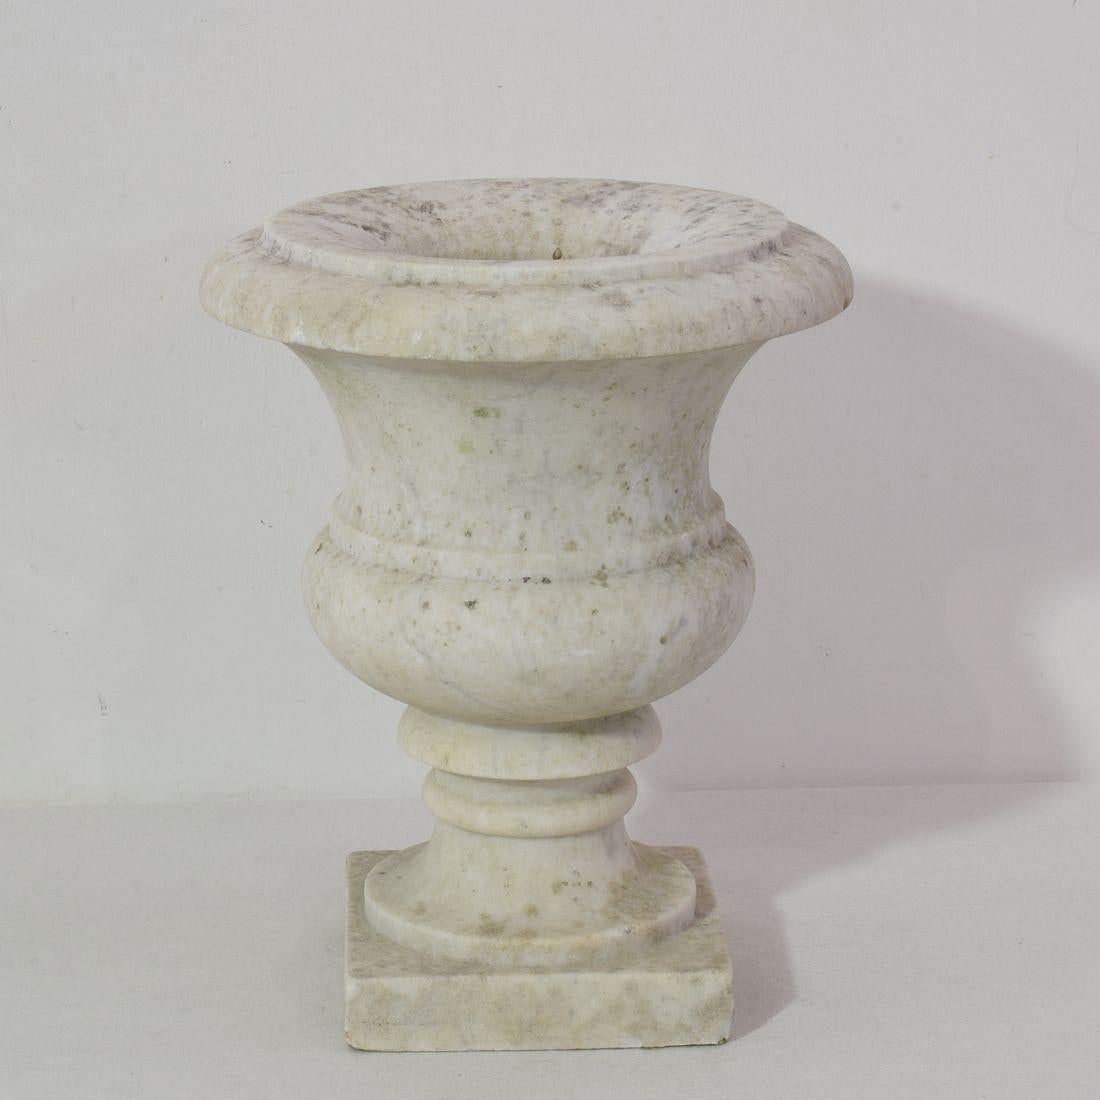 Rare white marble vase garden urn. Beautiful decorative centrepiece.
England, circa 1800-1850.
Weathered.
 